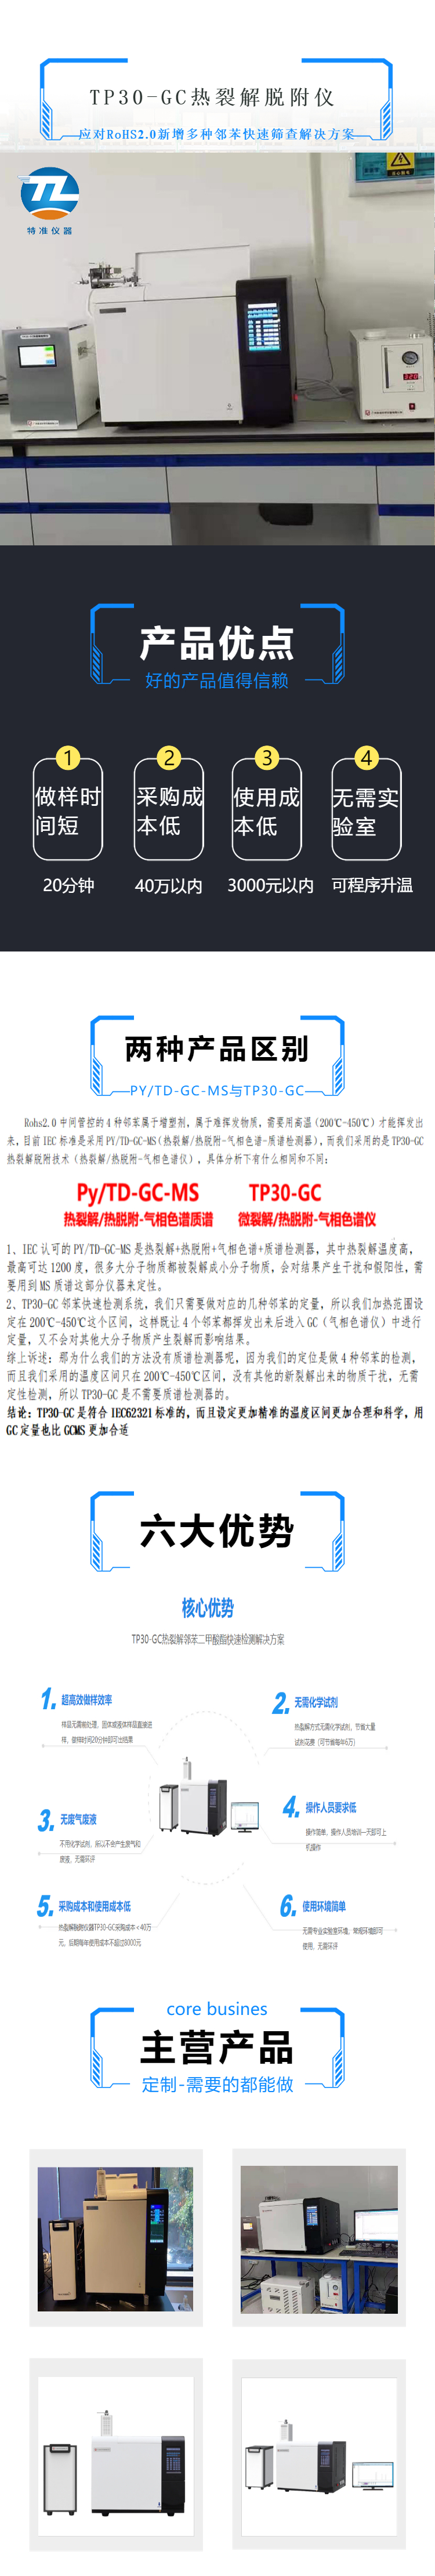 TP30-GC熱裂解.jpg